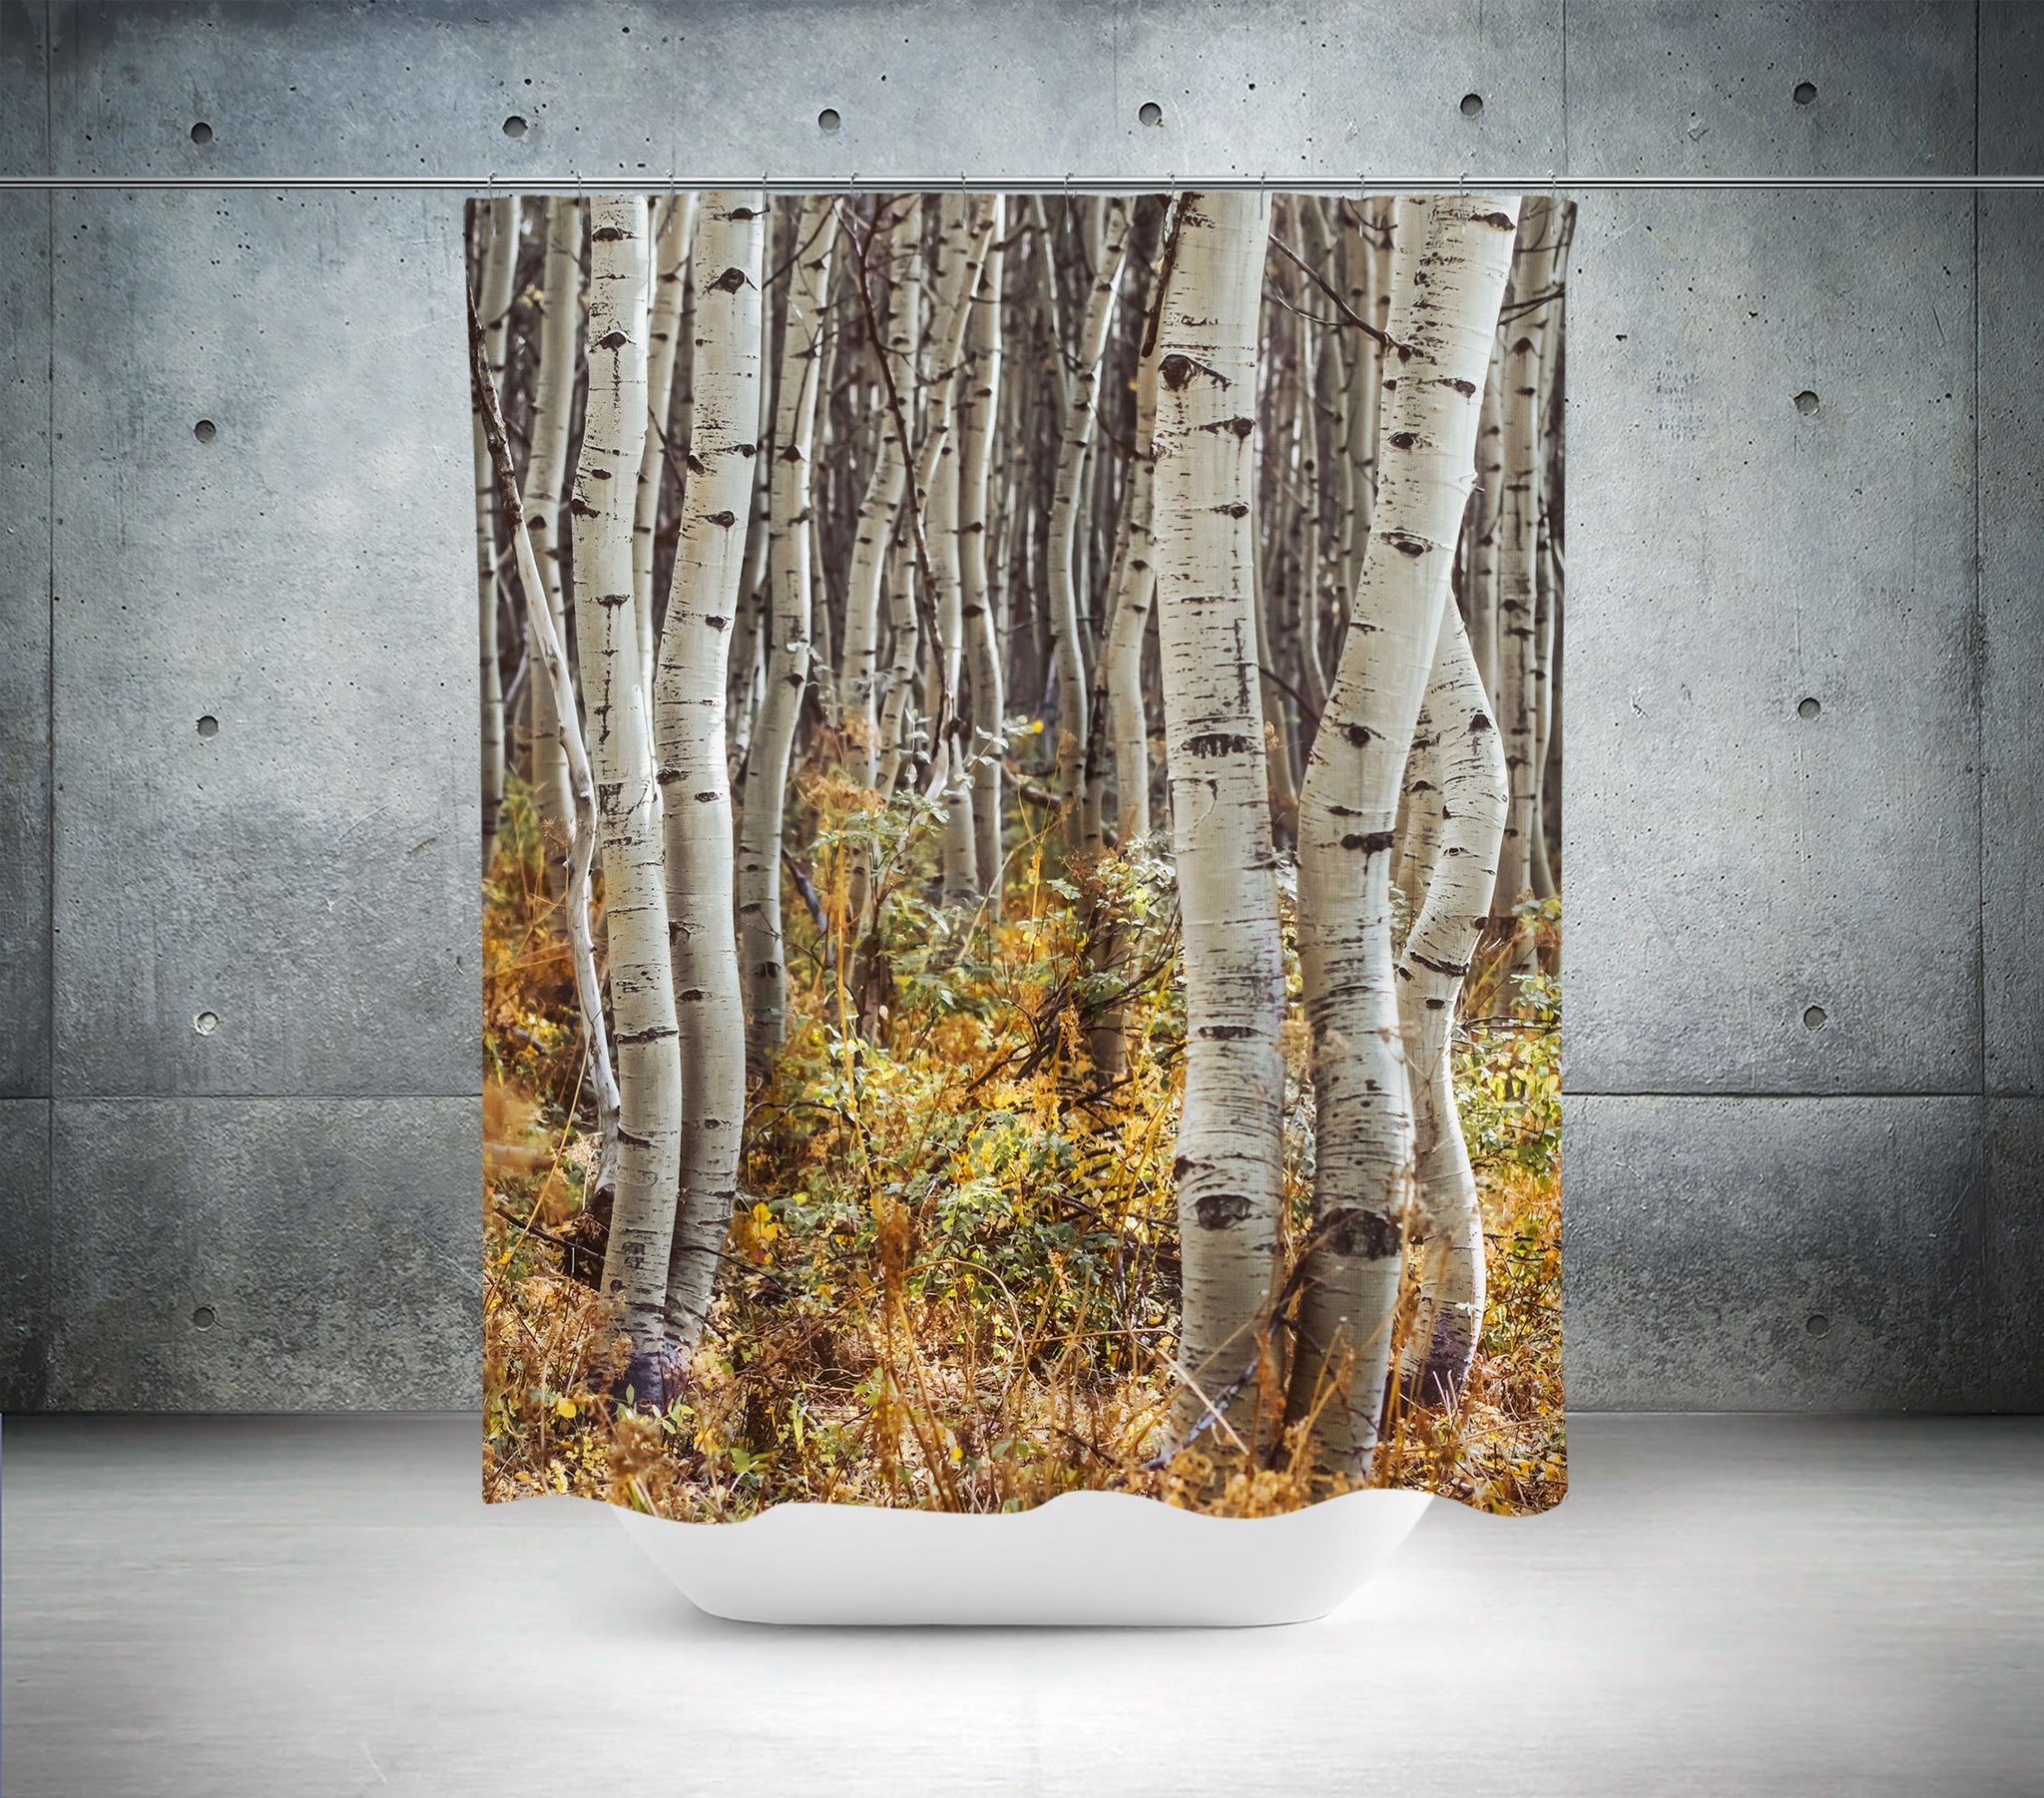 Autumn Aspen Trees Shower Curtain 71x74 inch - Forest